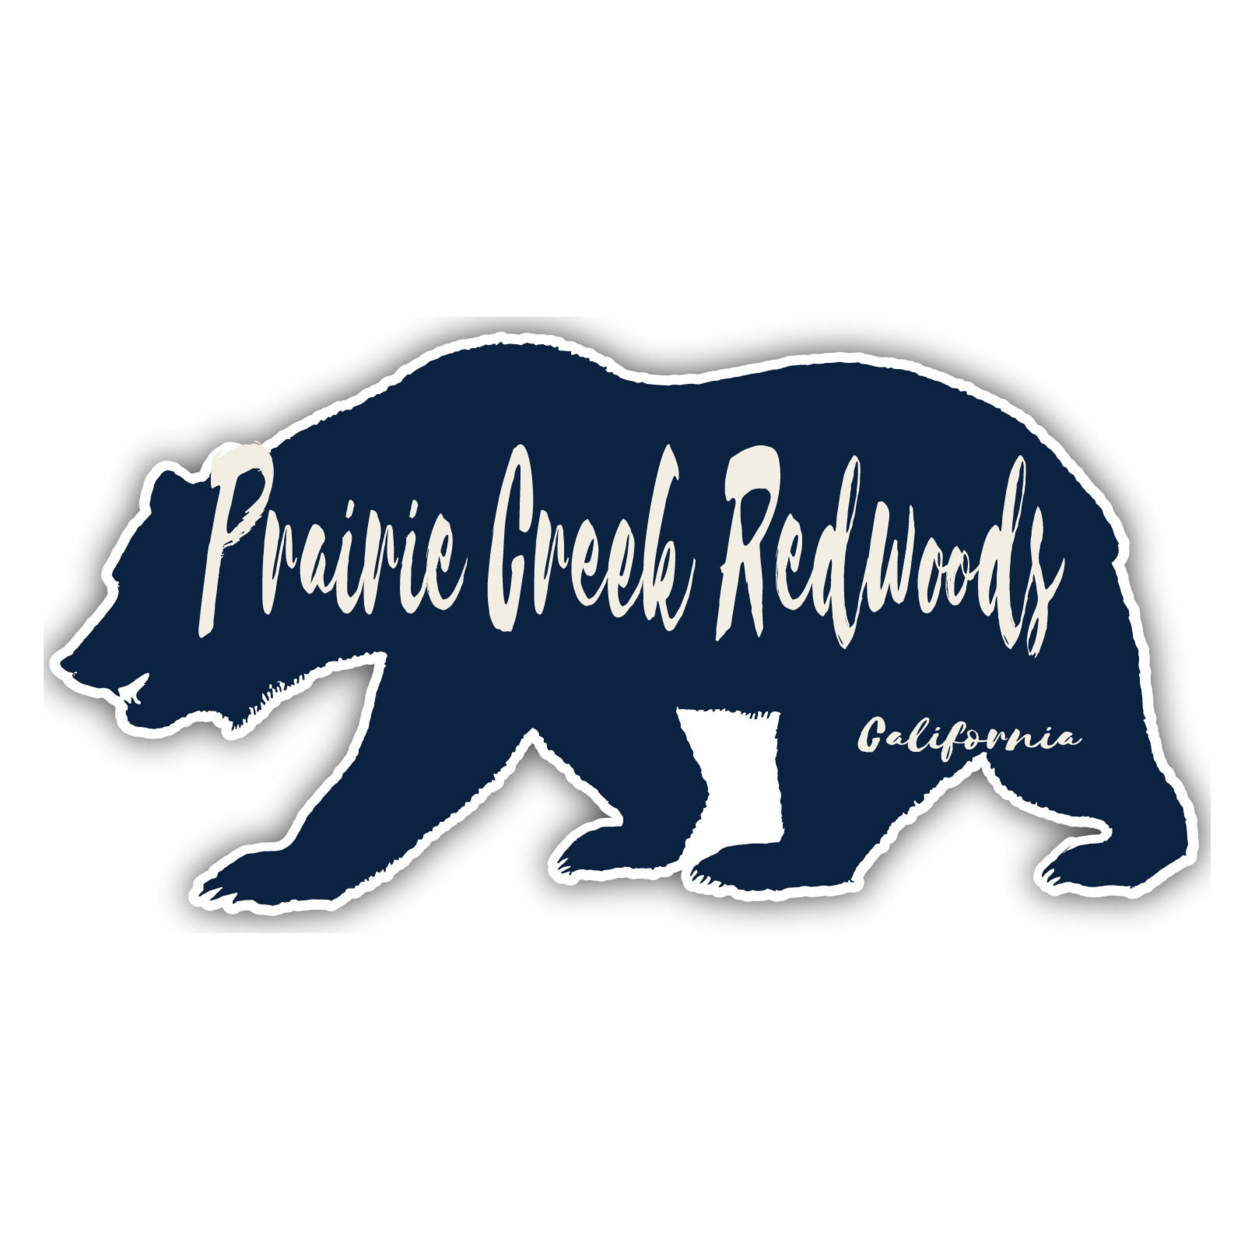 Prairie Creek Redwoods California Souvenir Decorative Stickers (Choose Theme And Size) - Single Unit, 4-Inch, Bear